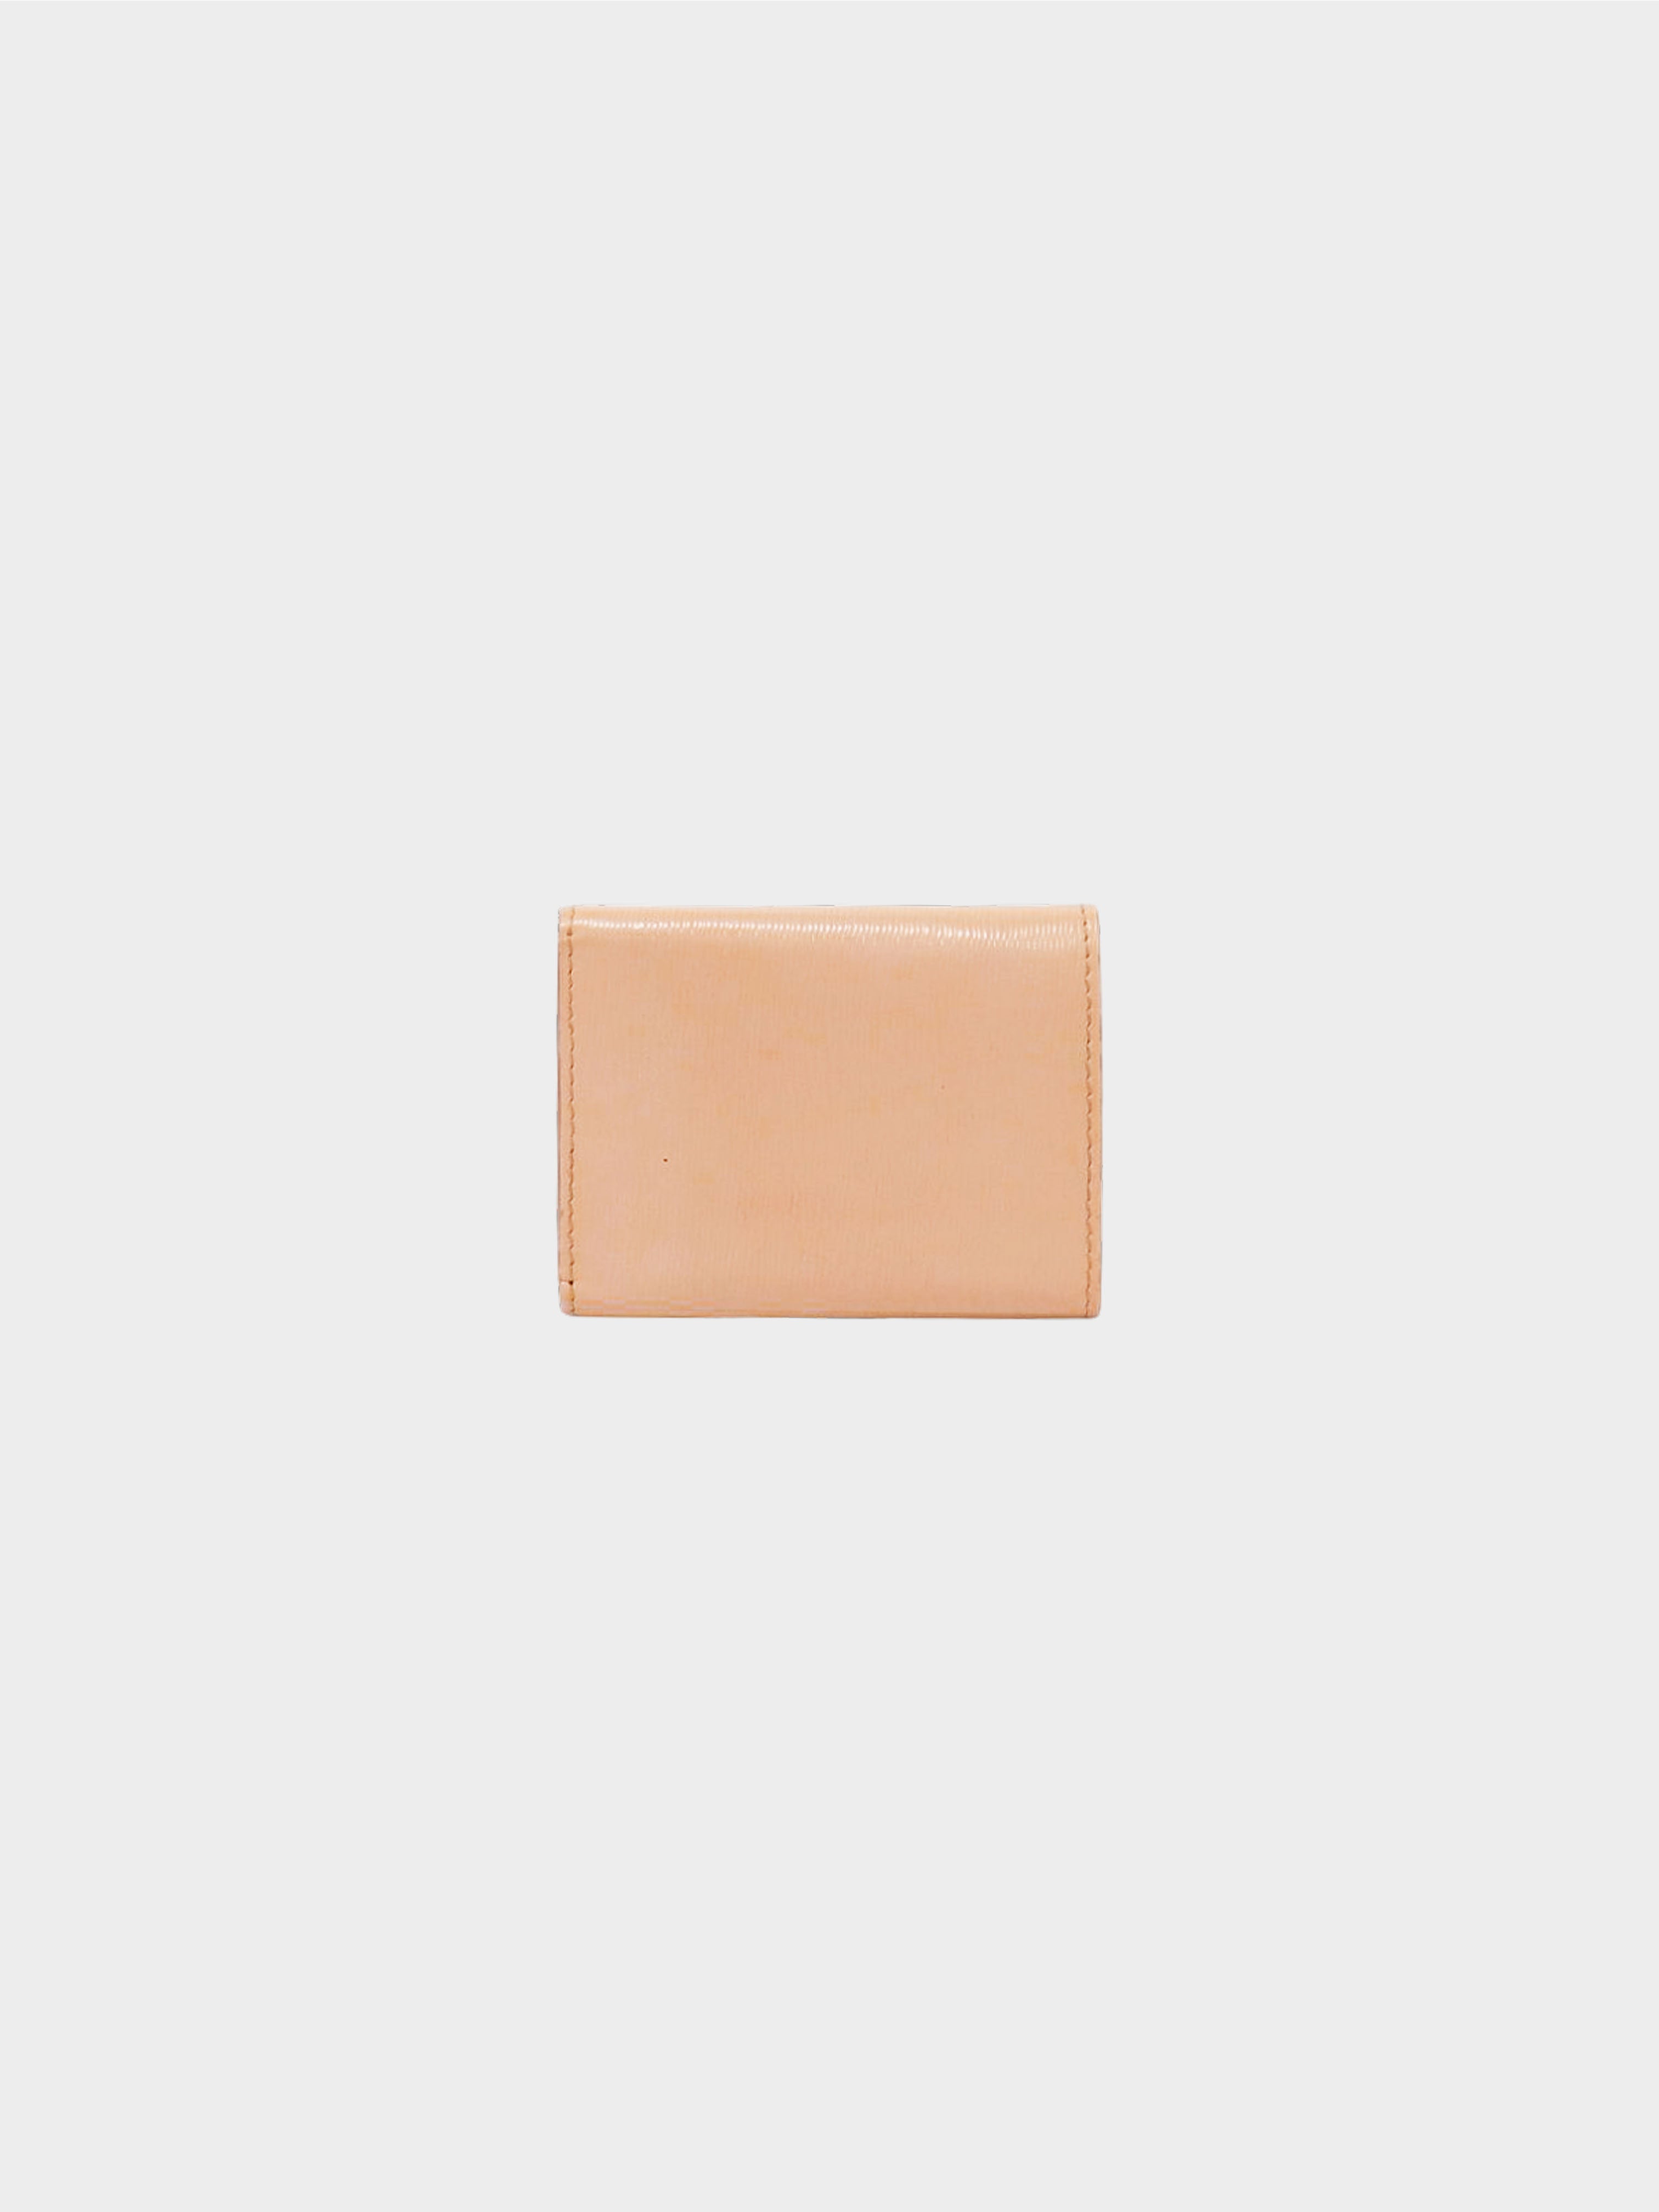 Prada 2020s Baby Pink Saffiano Leather Tri-fold Wallet